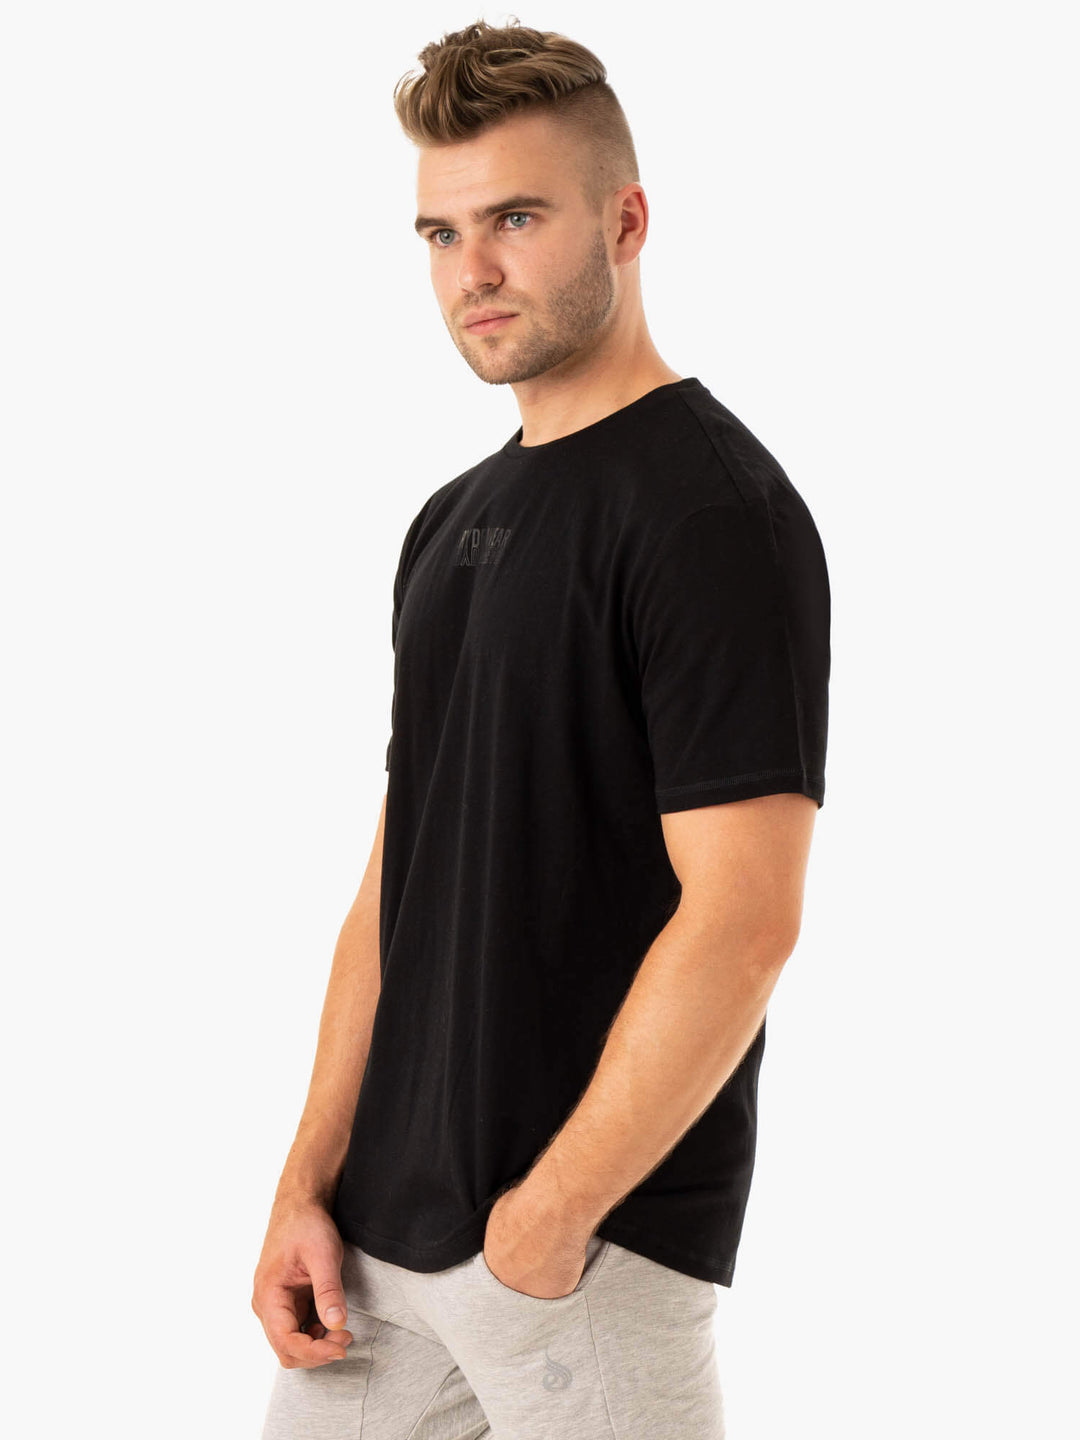 Limitless T-Shirt - Black Clothing Ryderwear 